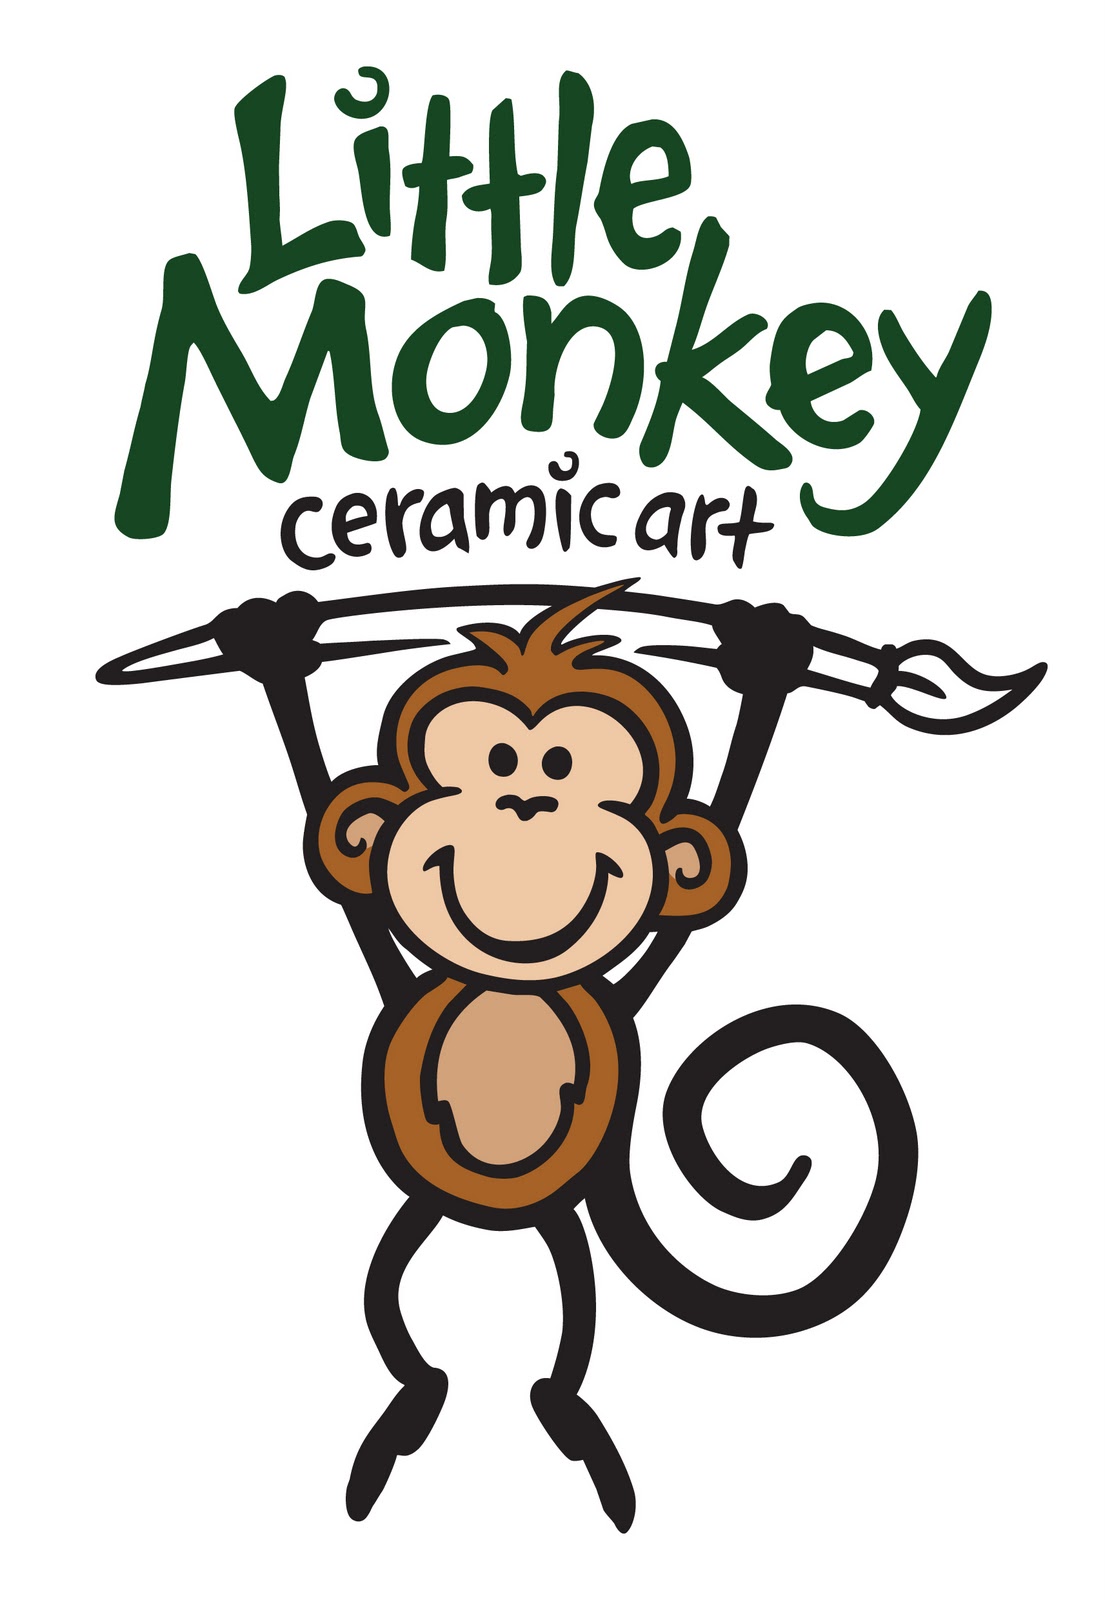 Hanging Monkey Cartoon | Clipart Panda - Free Clipart Images